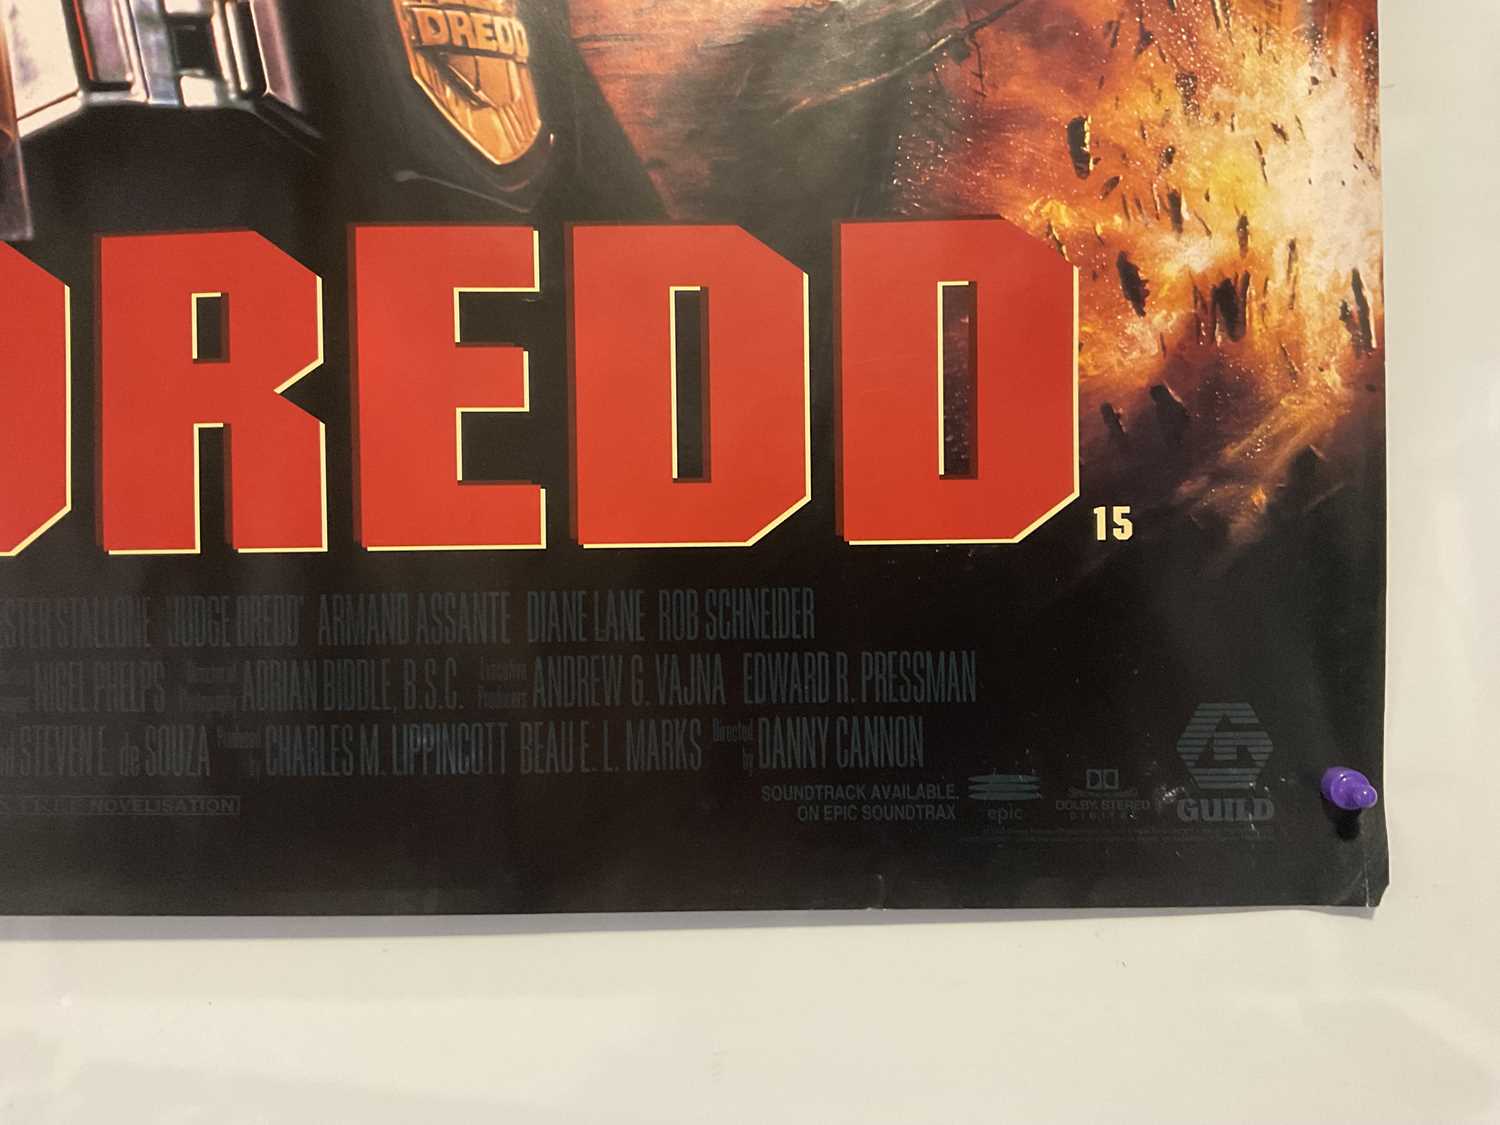 JUDGE DREDD (1995) UK Quad film poster, comic book adaptation starring Sylvester Stallone, artwork - Image 3 of 6